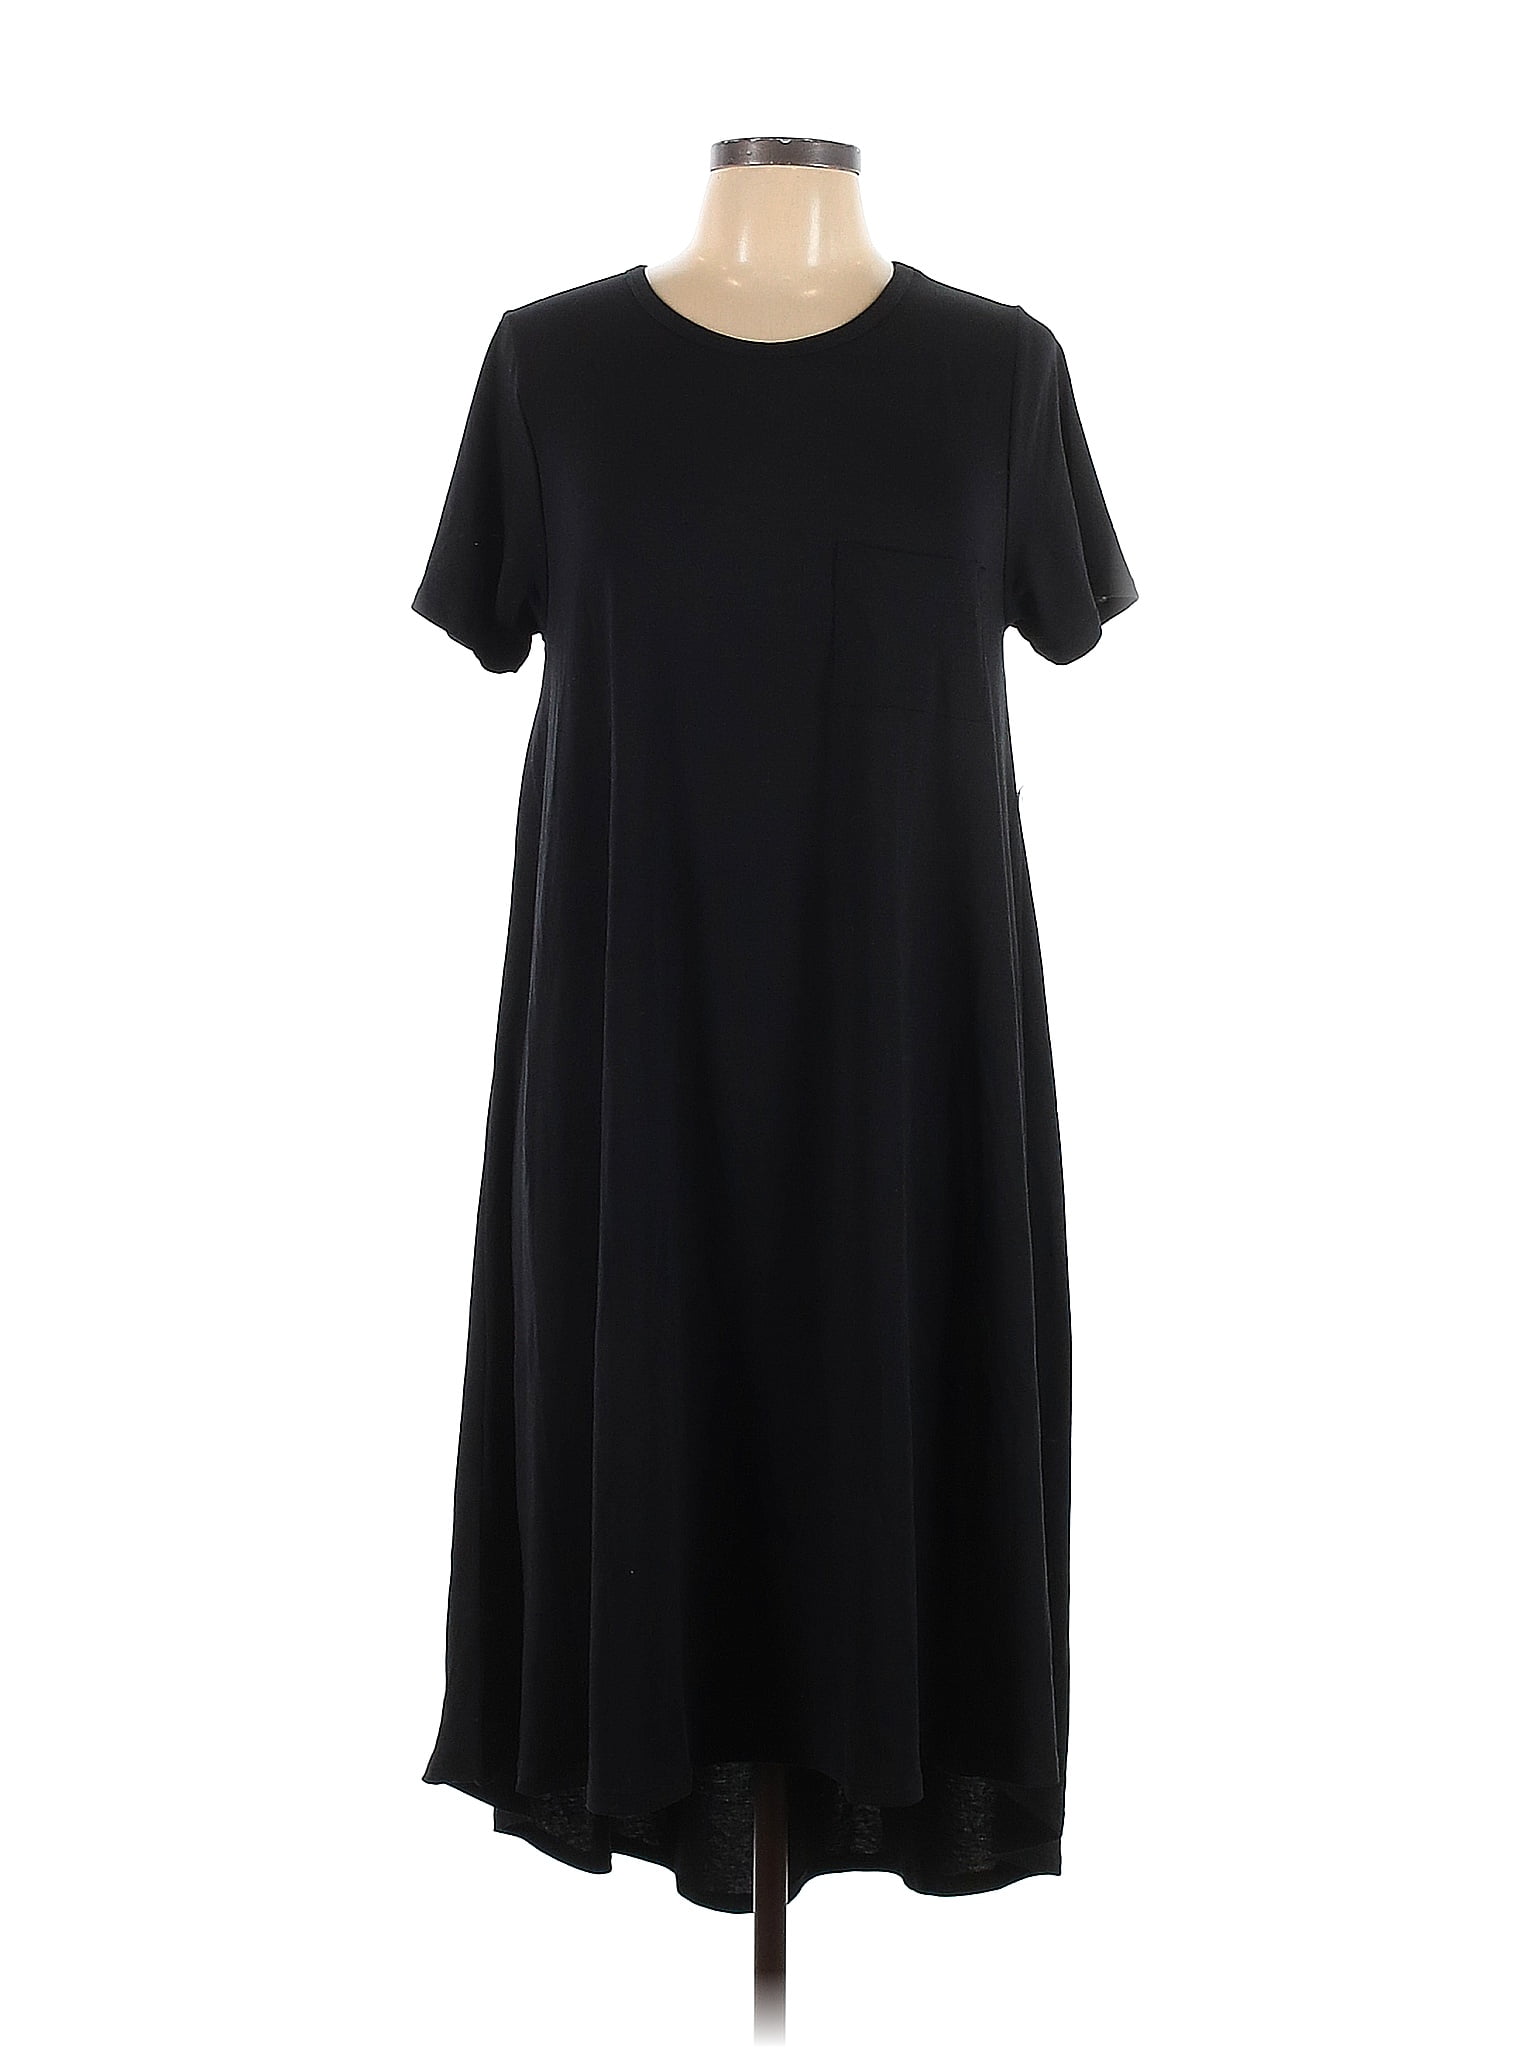 Lularoe Solid Black Casual Dress Size L - 47% off | thredUP